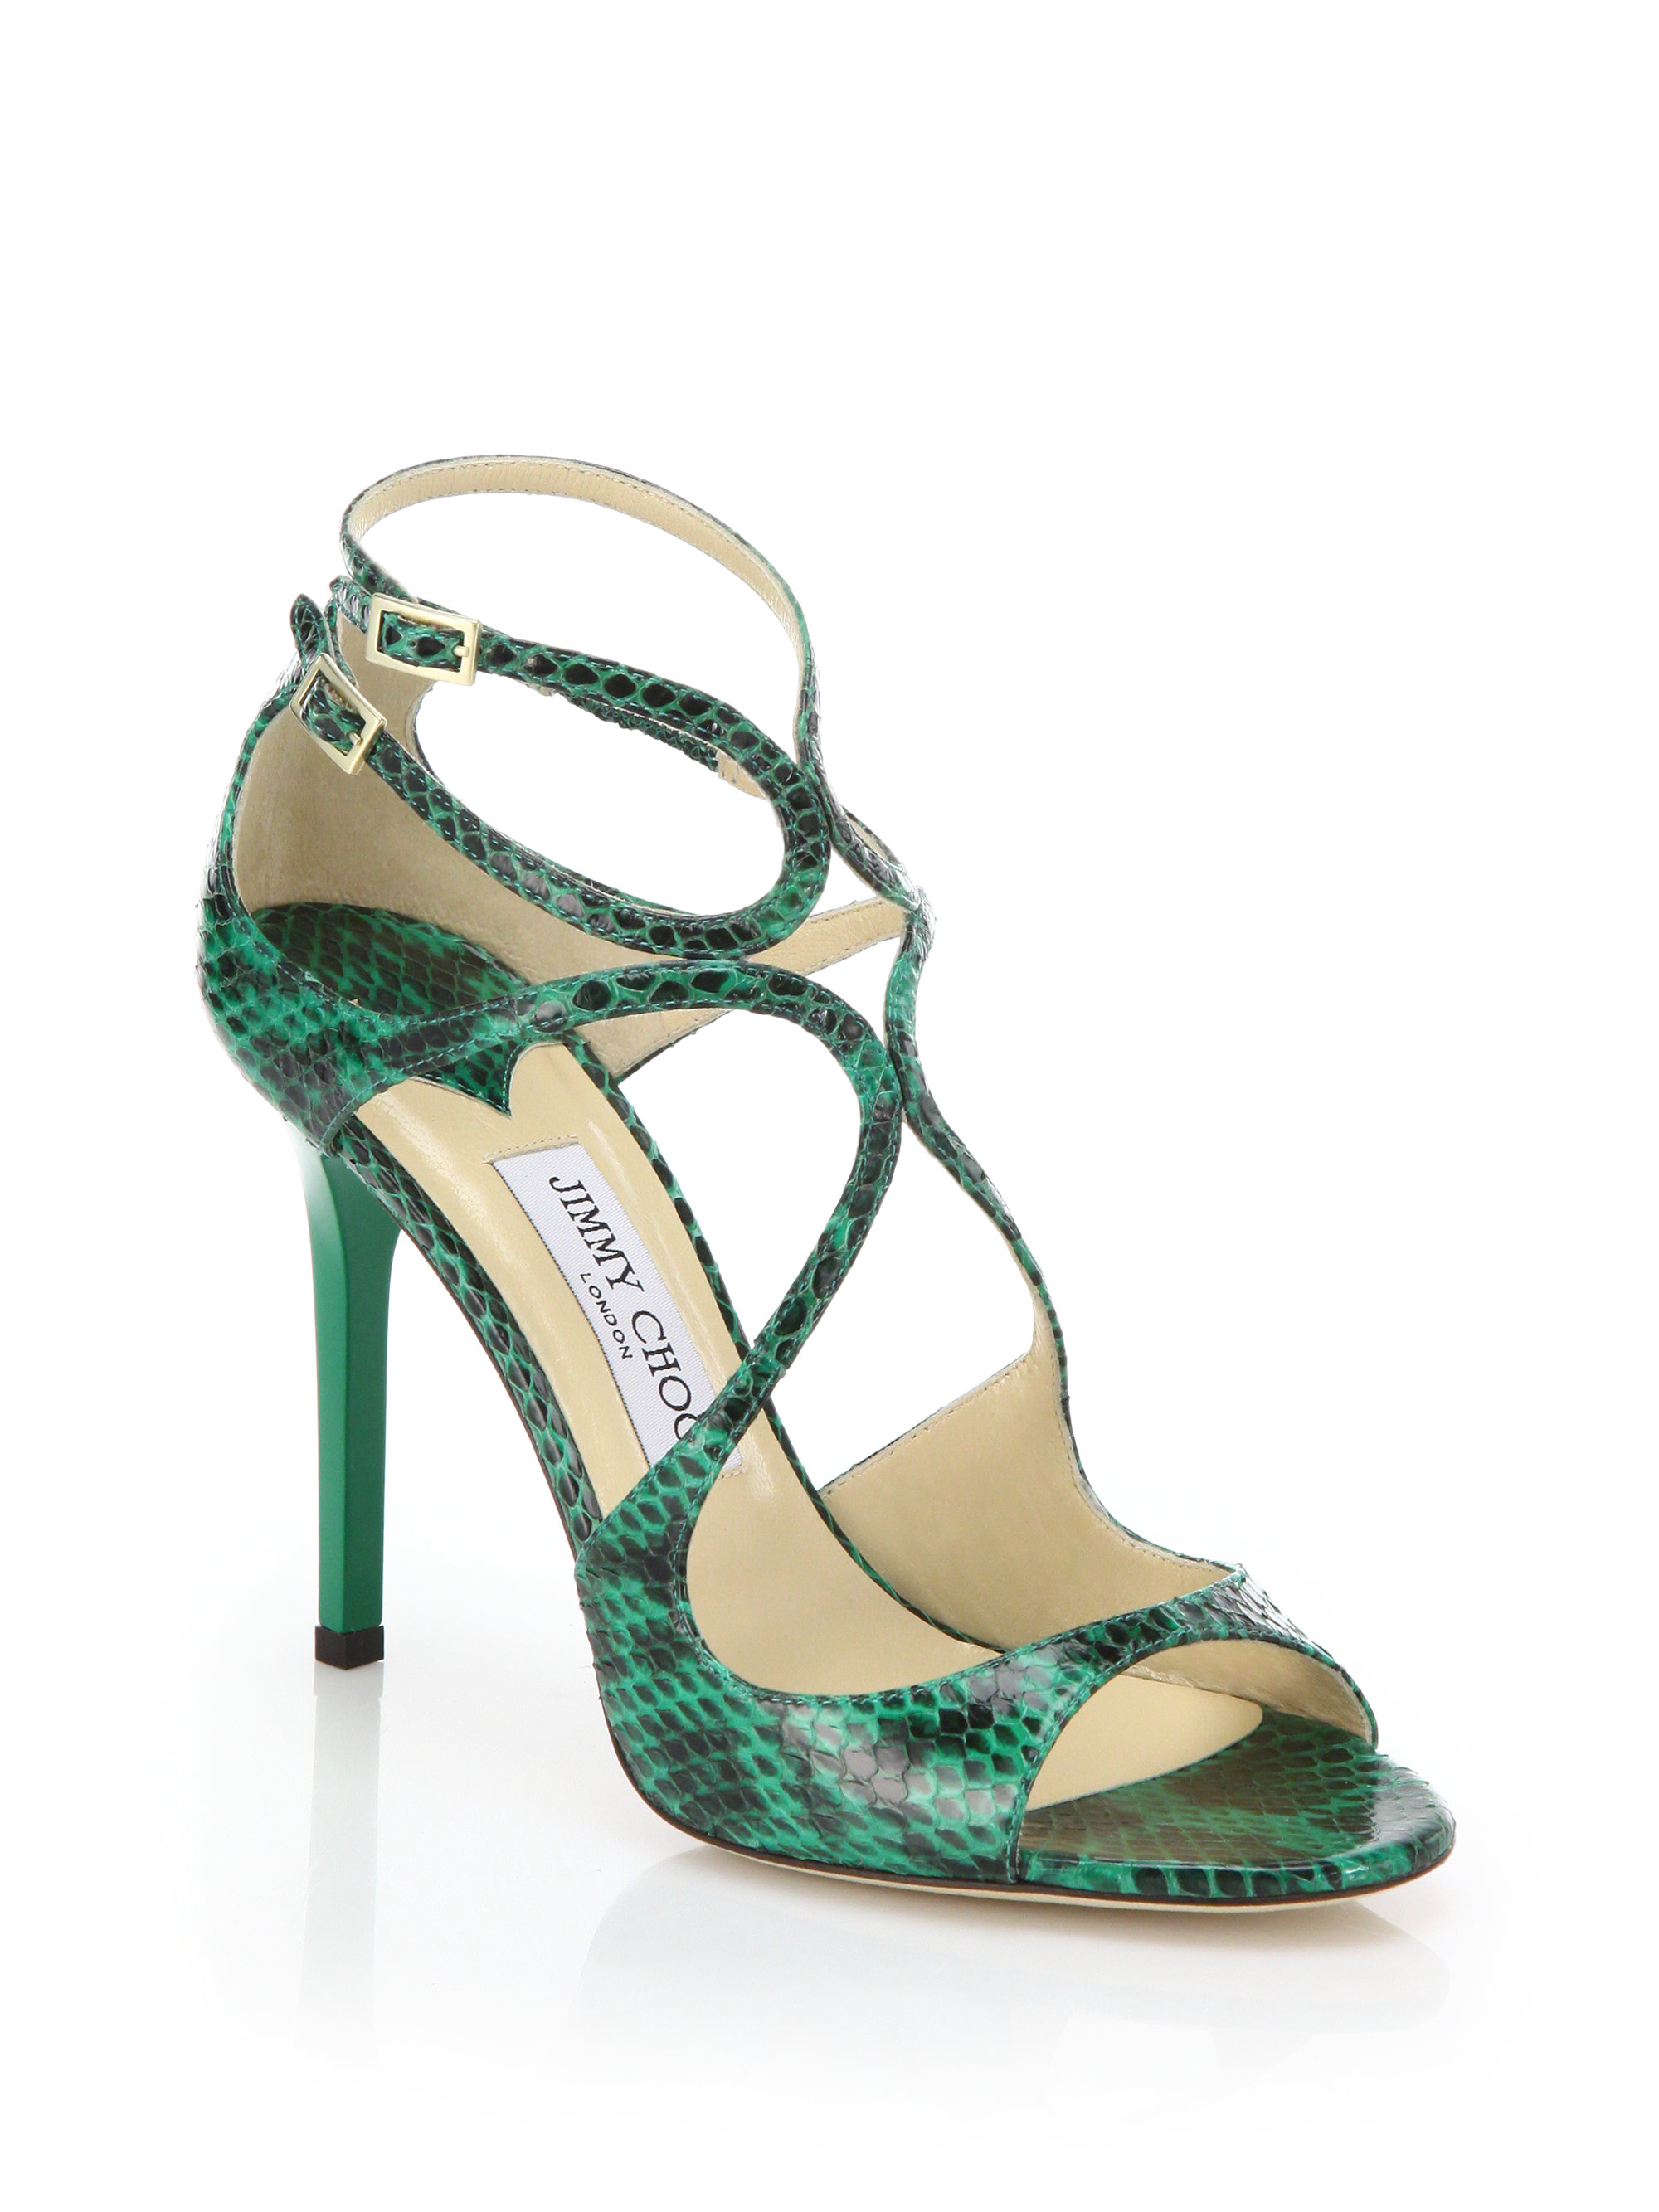 Jimmy Choo Lang Snakeskin Sandals in Green | Lyst